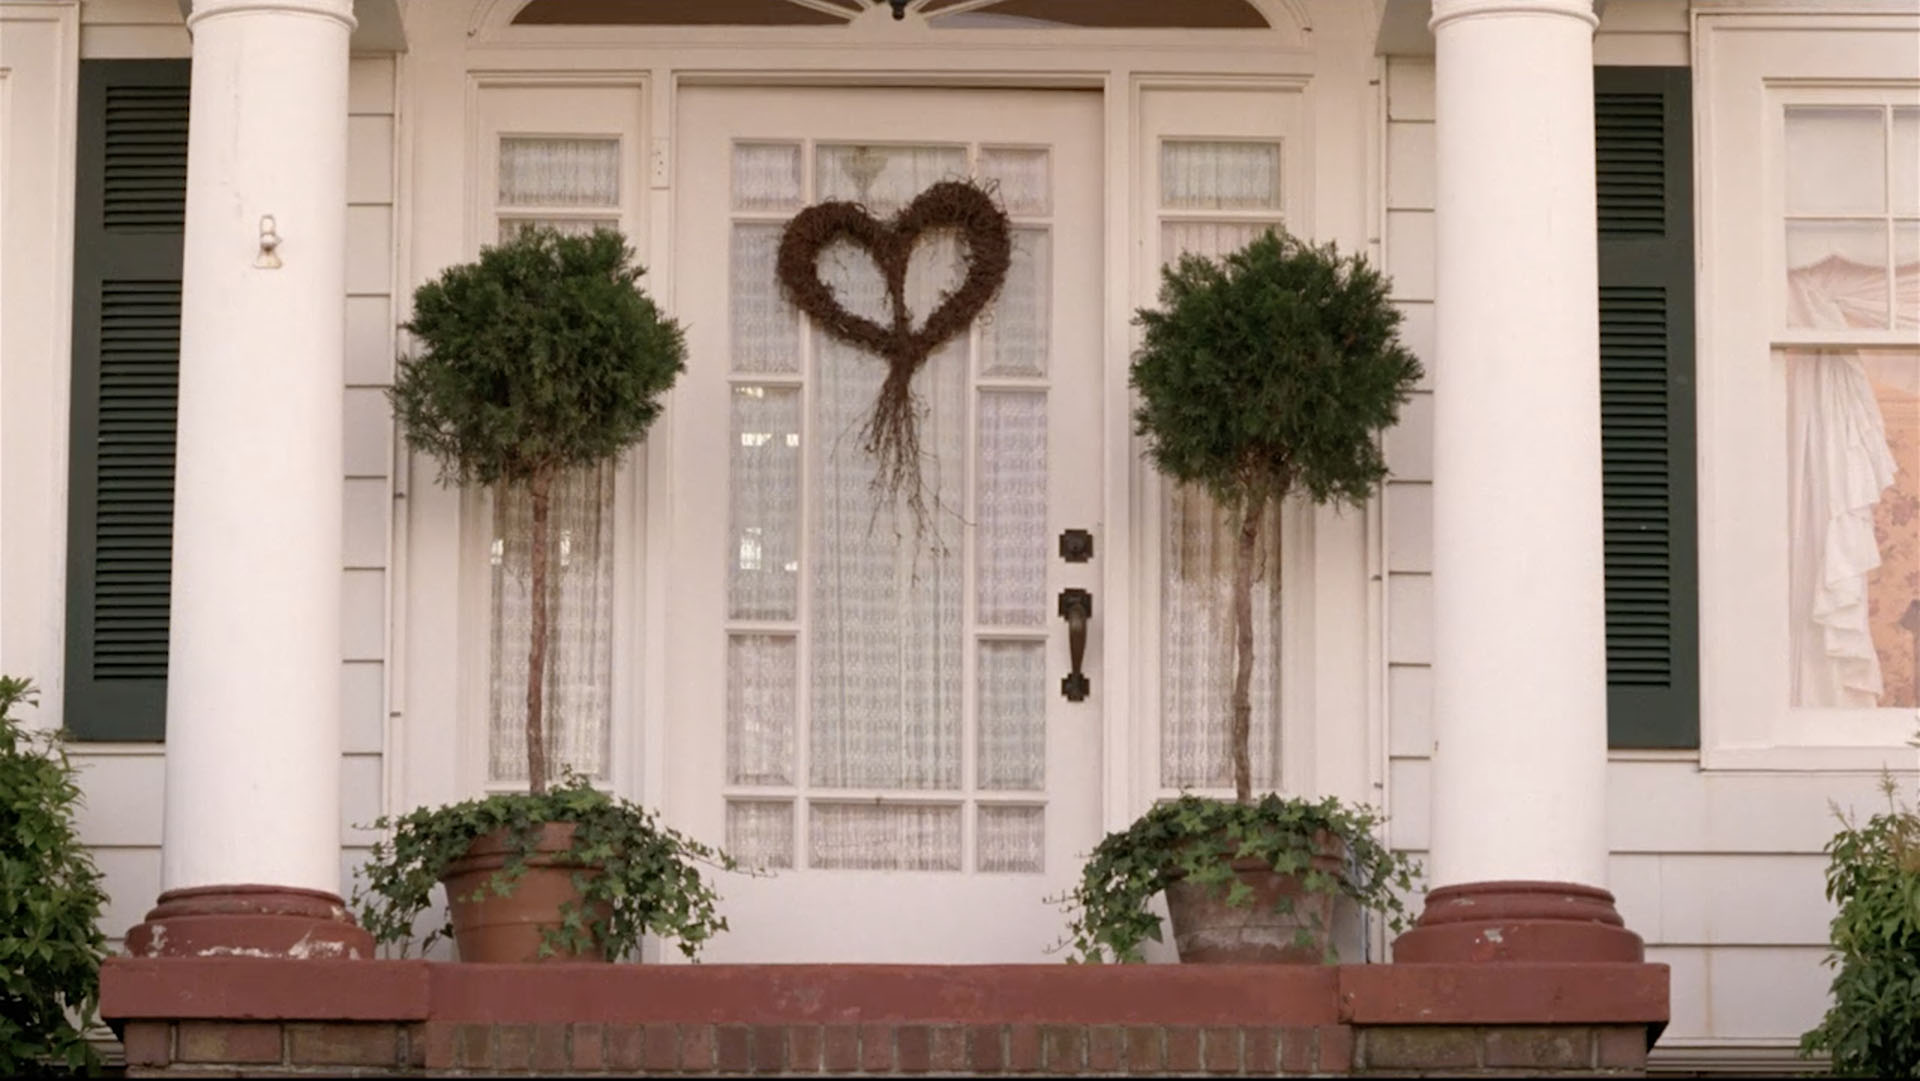 Heart shaped wreath on a front door